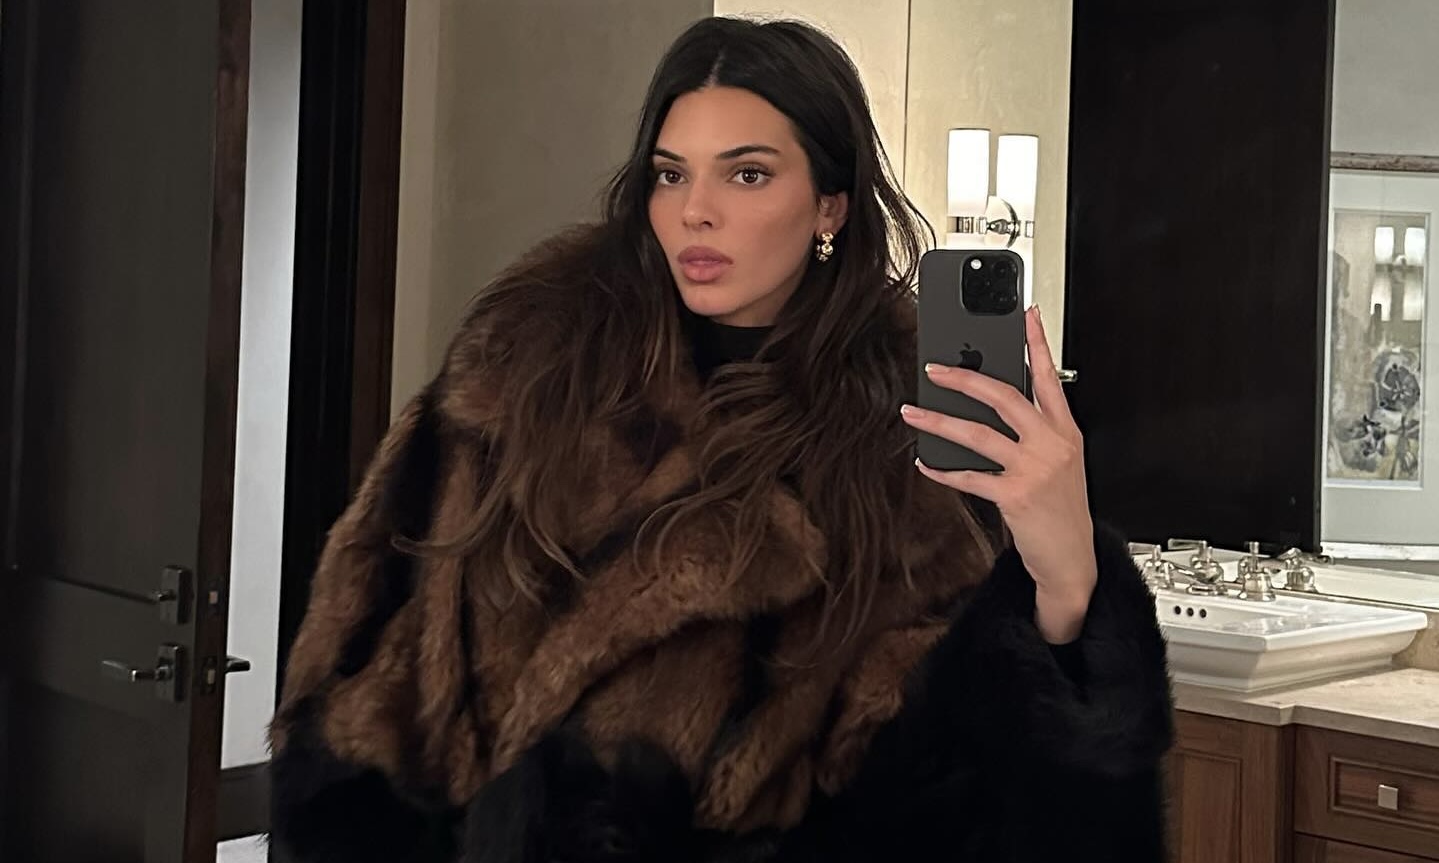 More than a Kardashian: Singer LIZZO launches shapewear brand YITTY